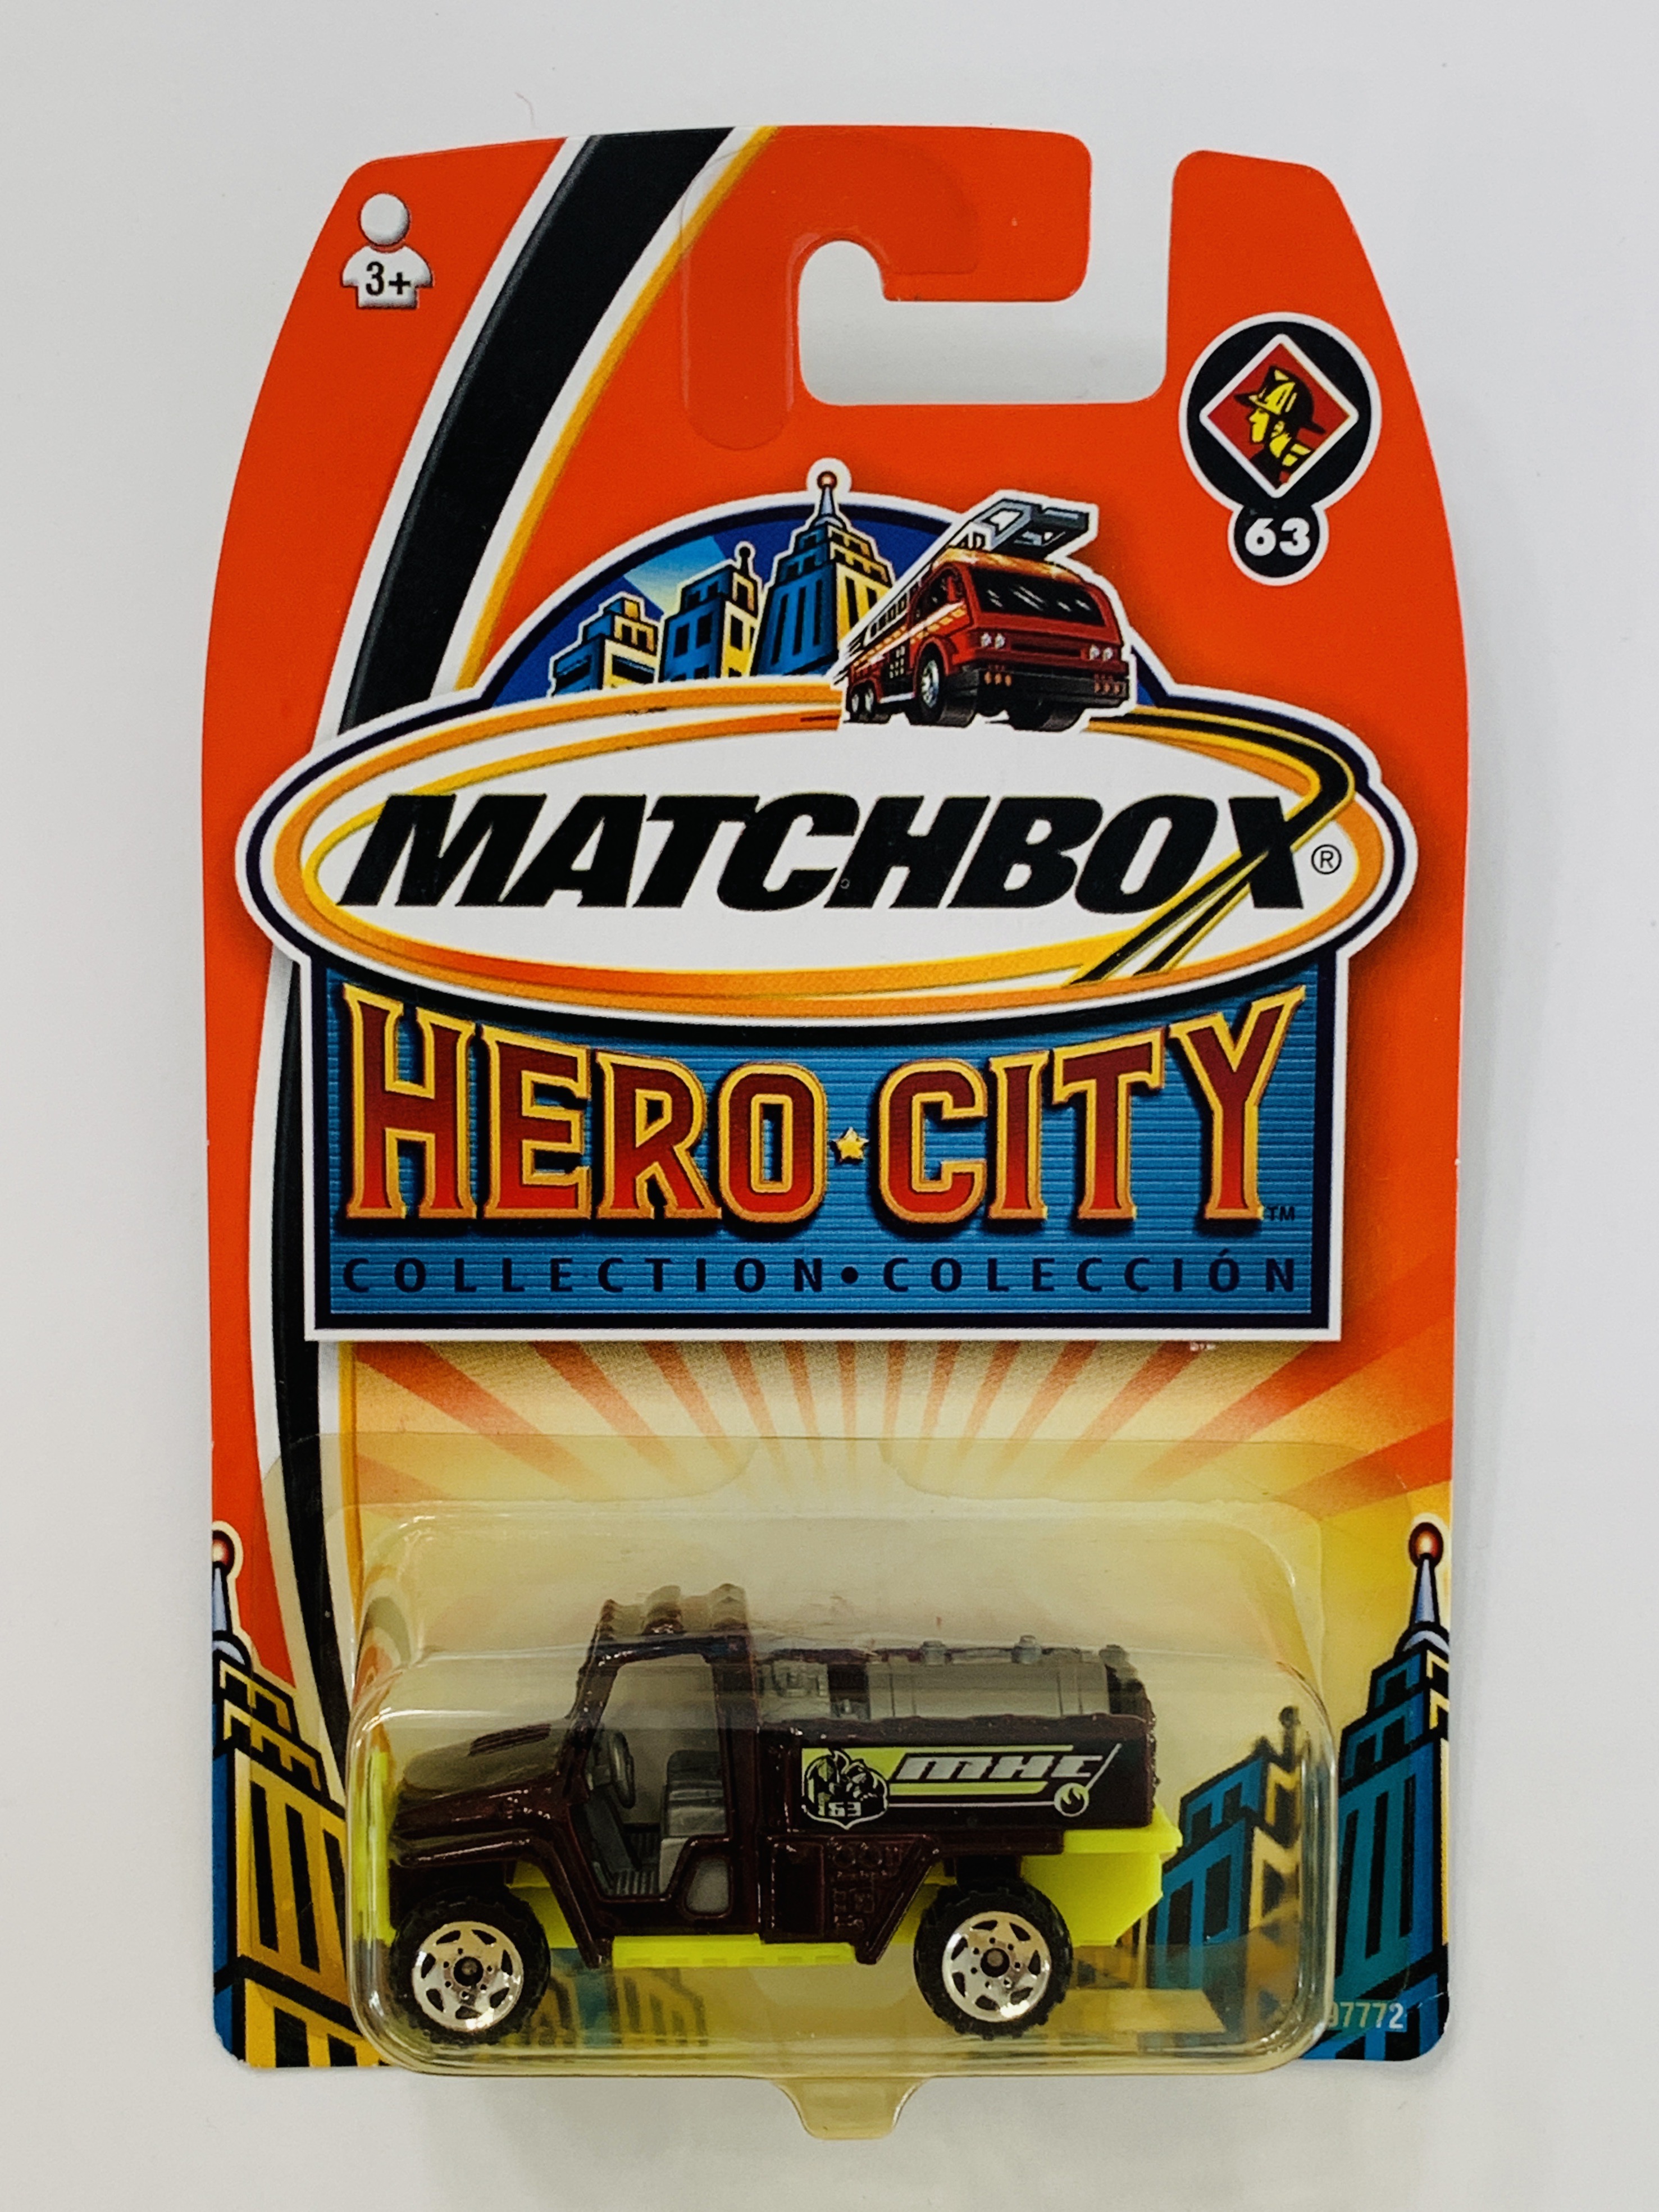 Matchbox Hero City #63 All Terrain Fire Tanker